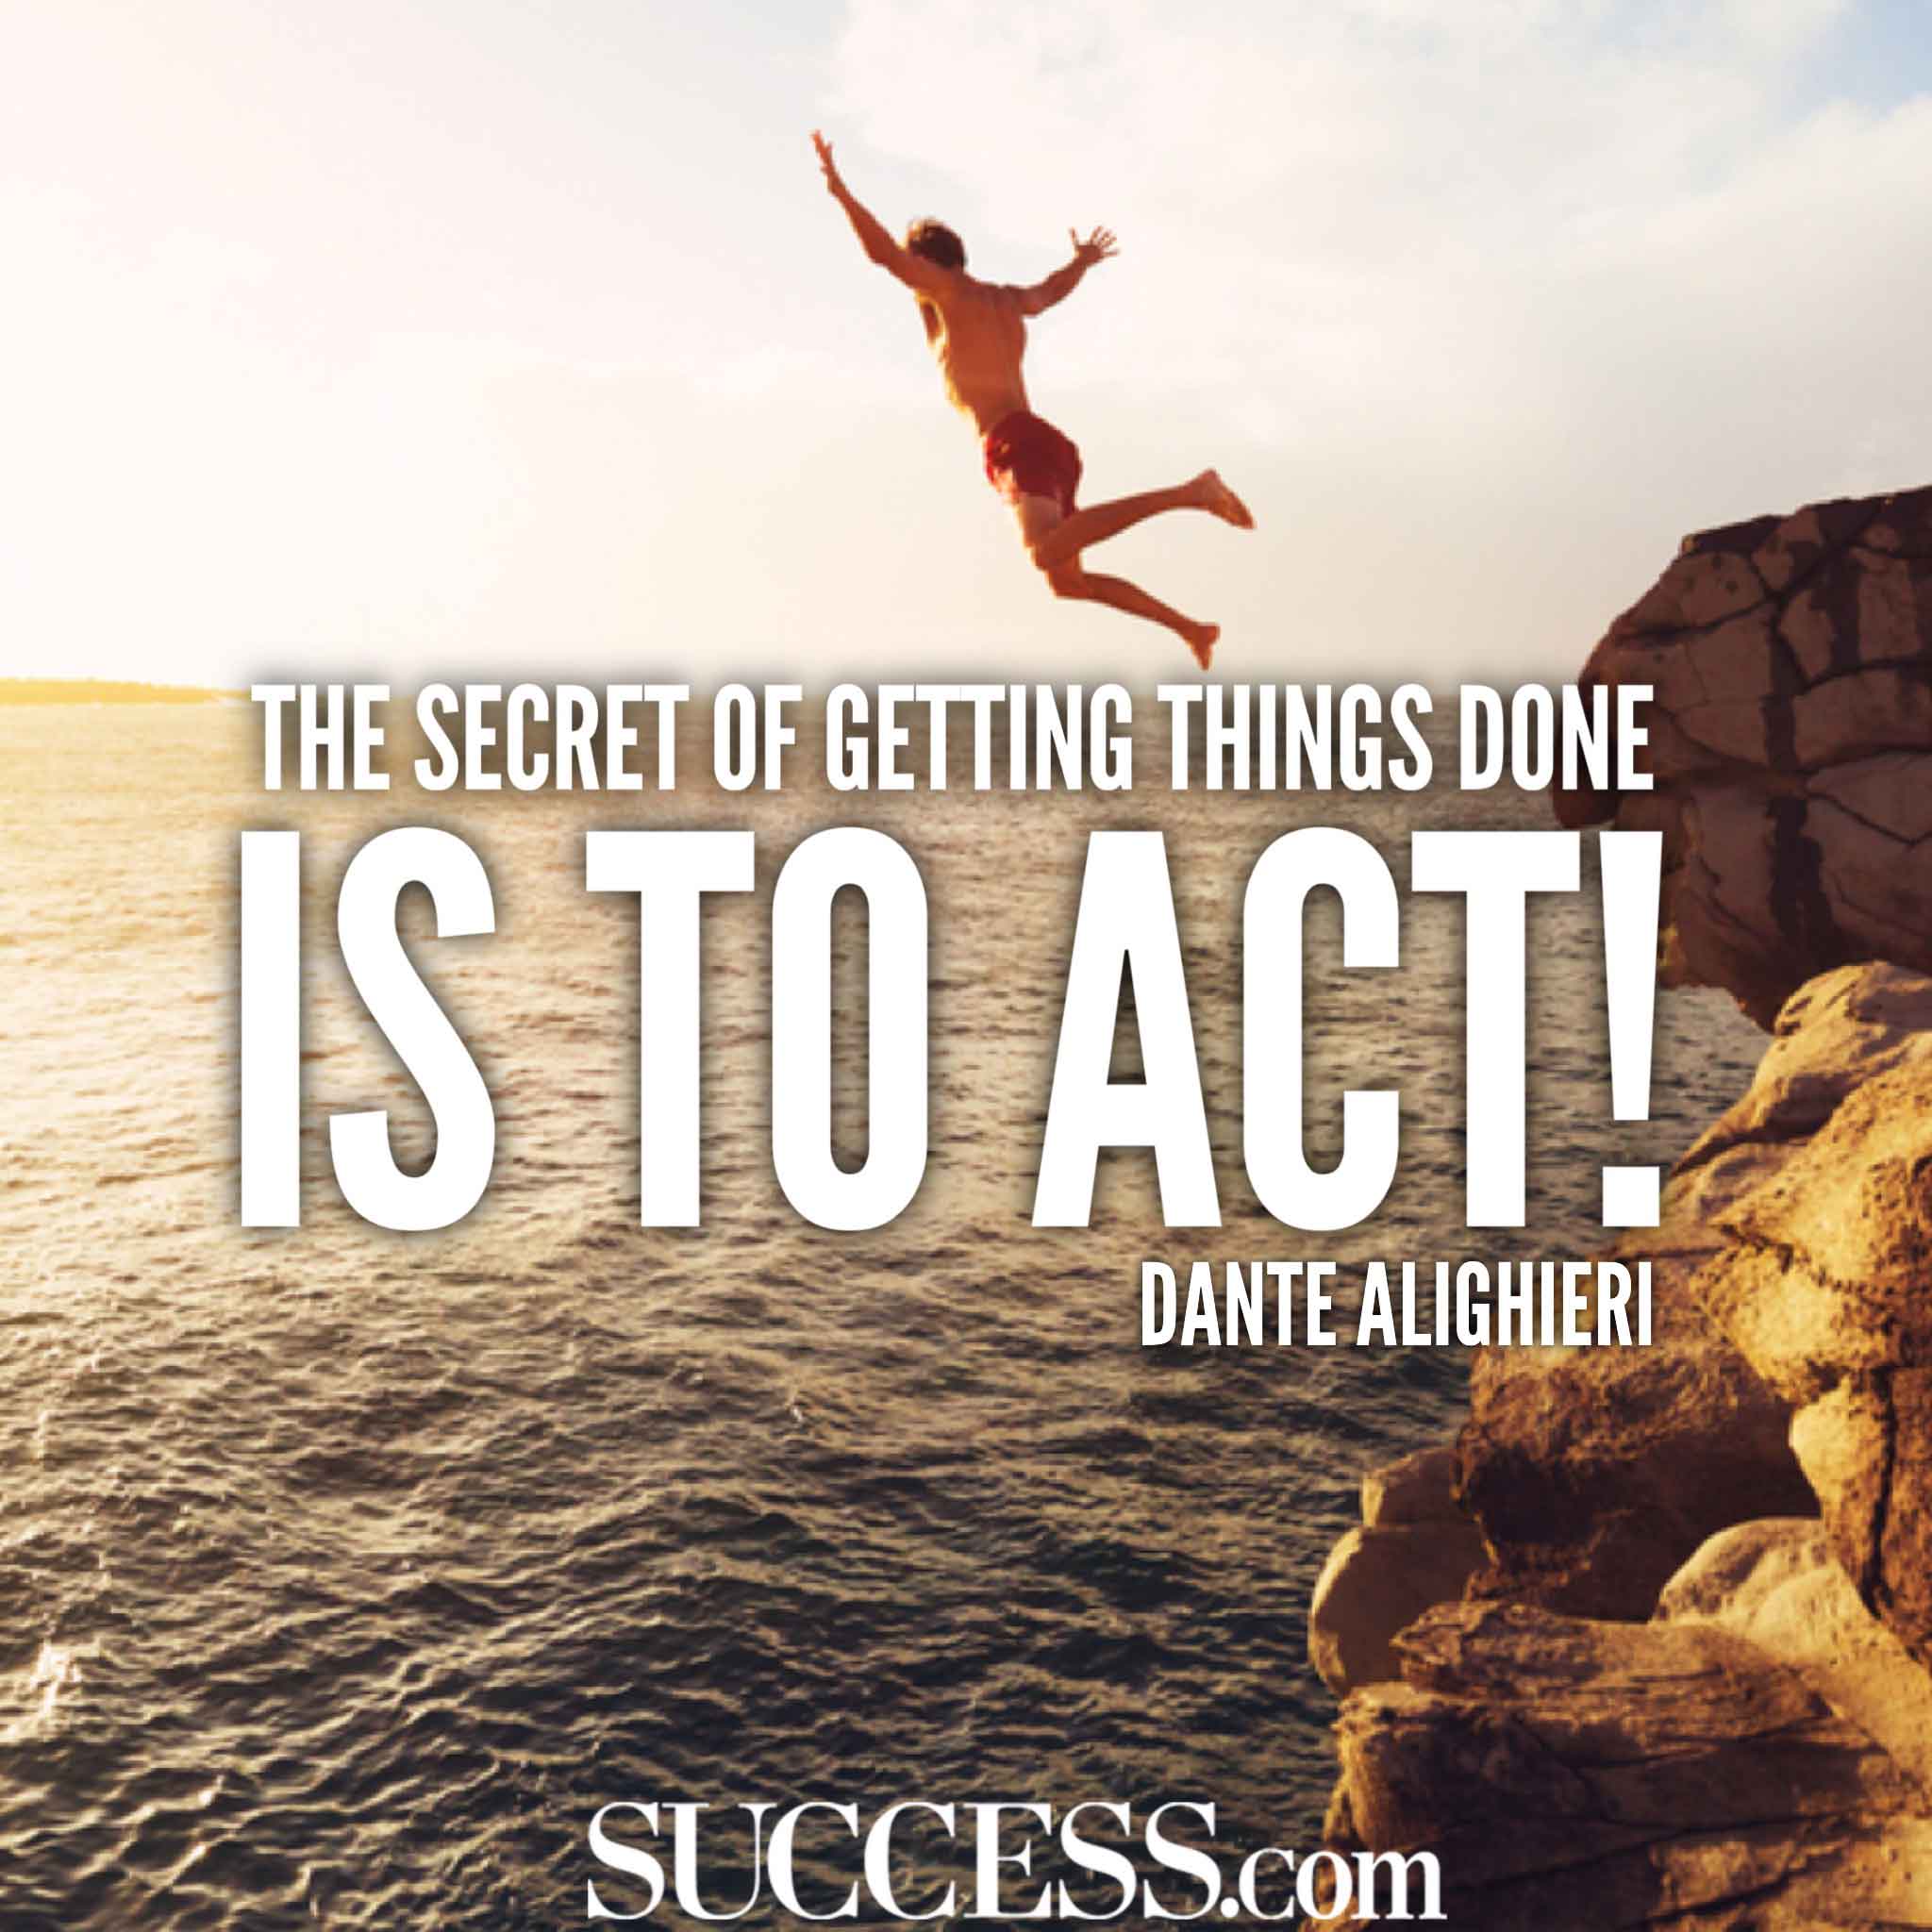 “The secret of getting things done is to act” —Dante Alighieri-hoogbegaafd